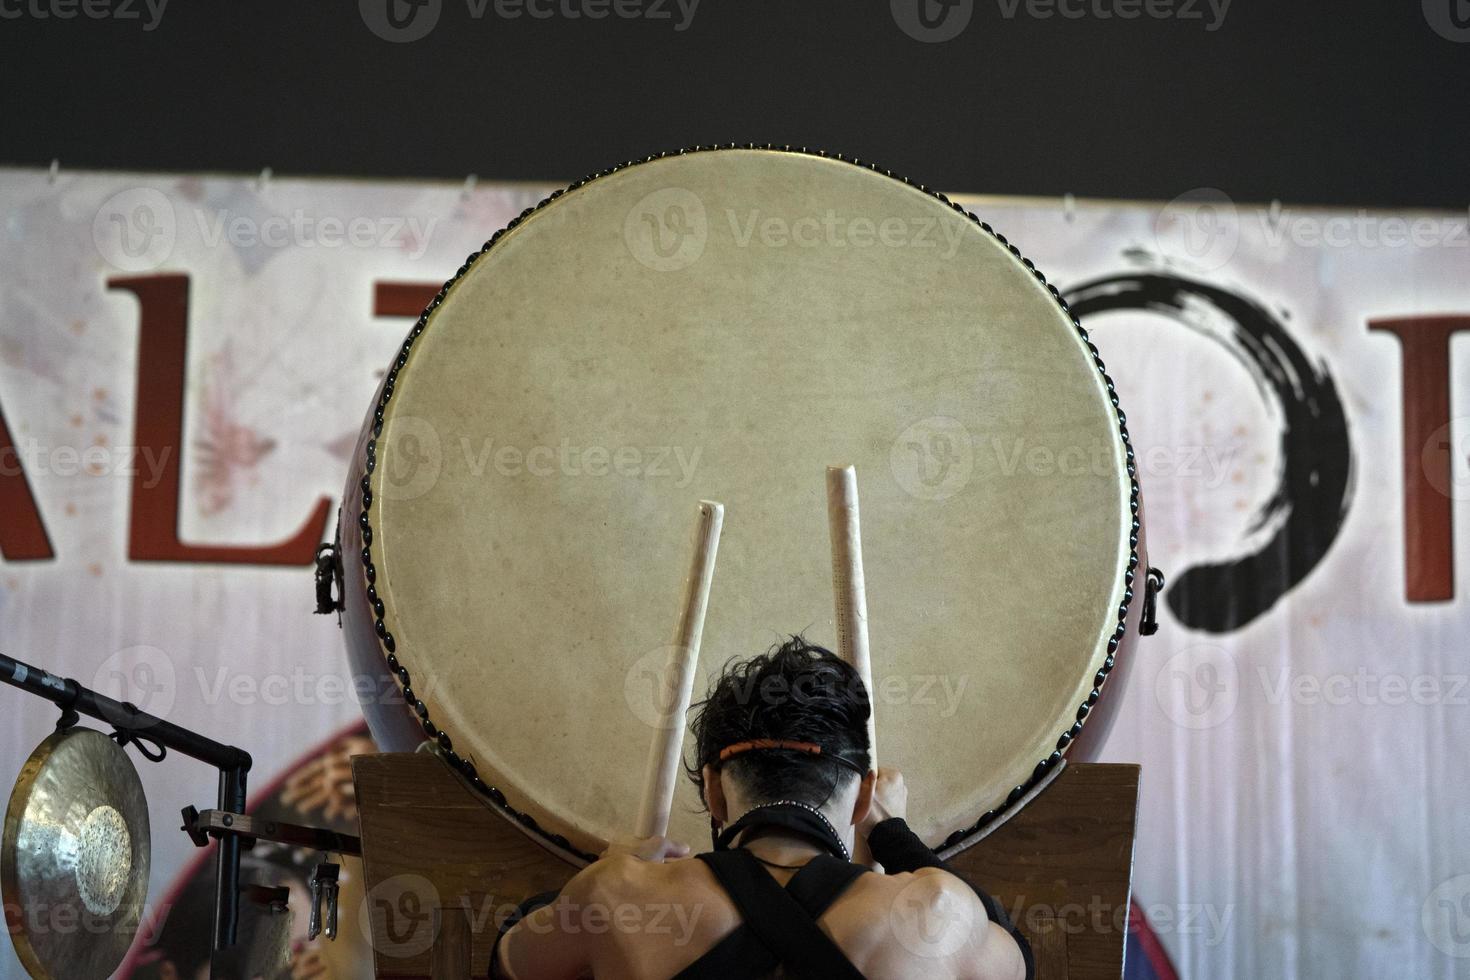 baterista japonês em ação foto